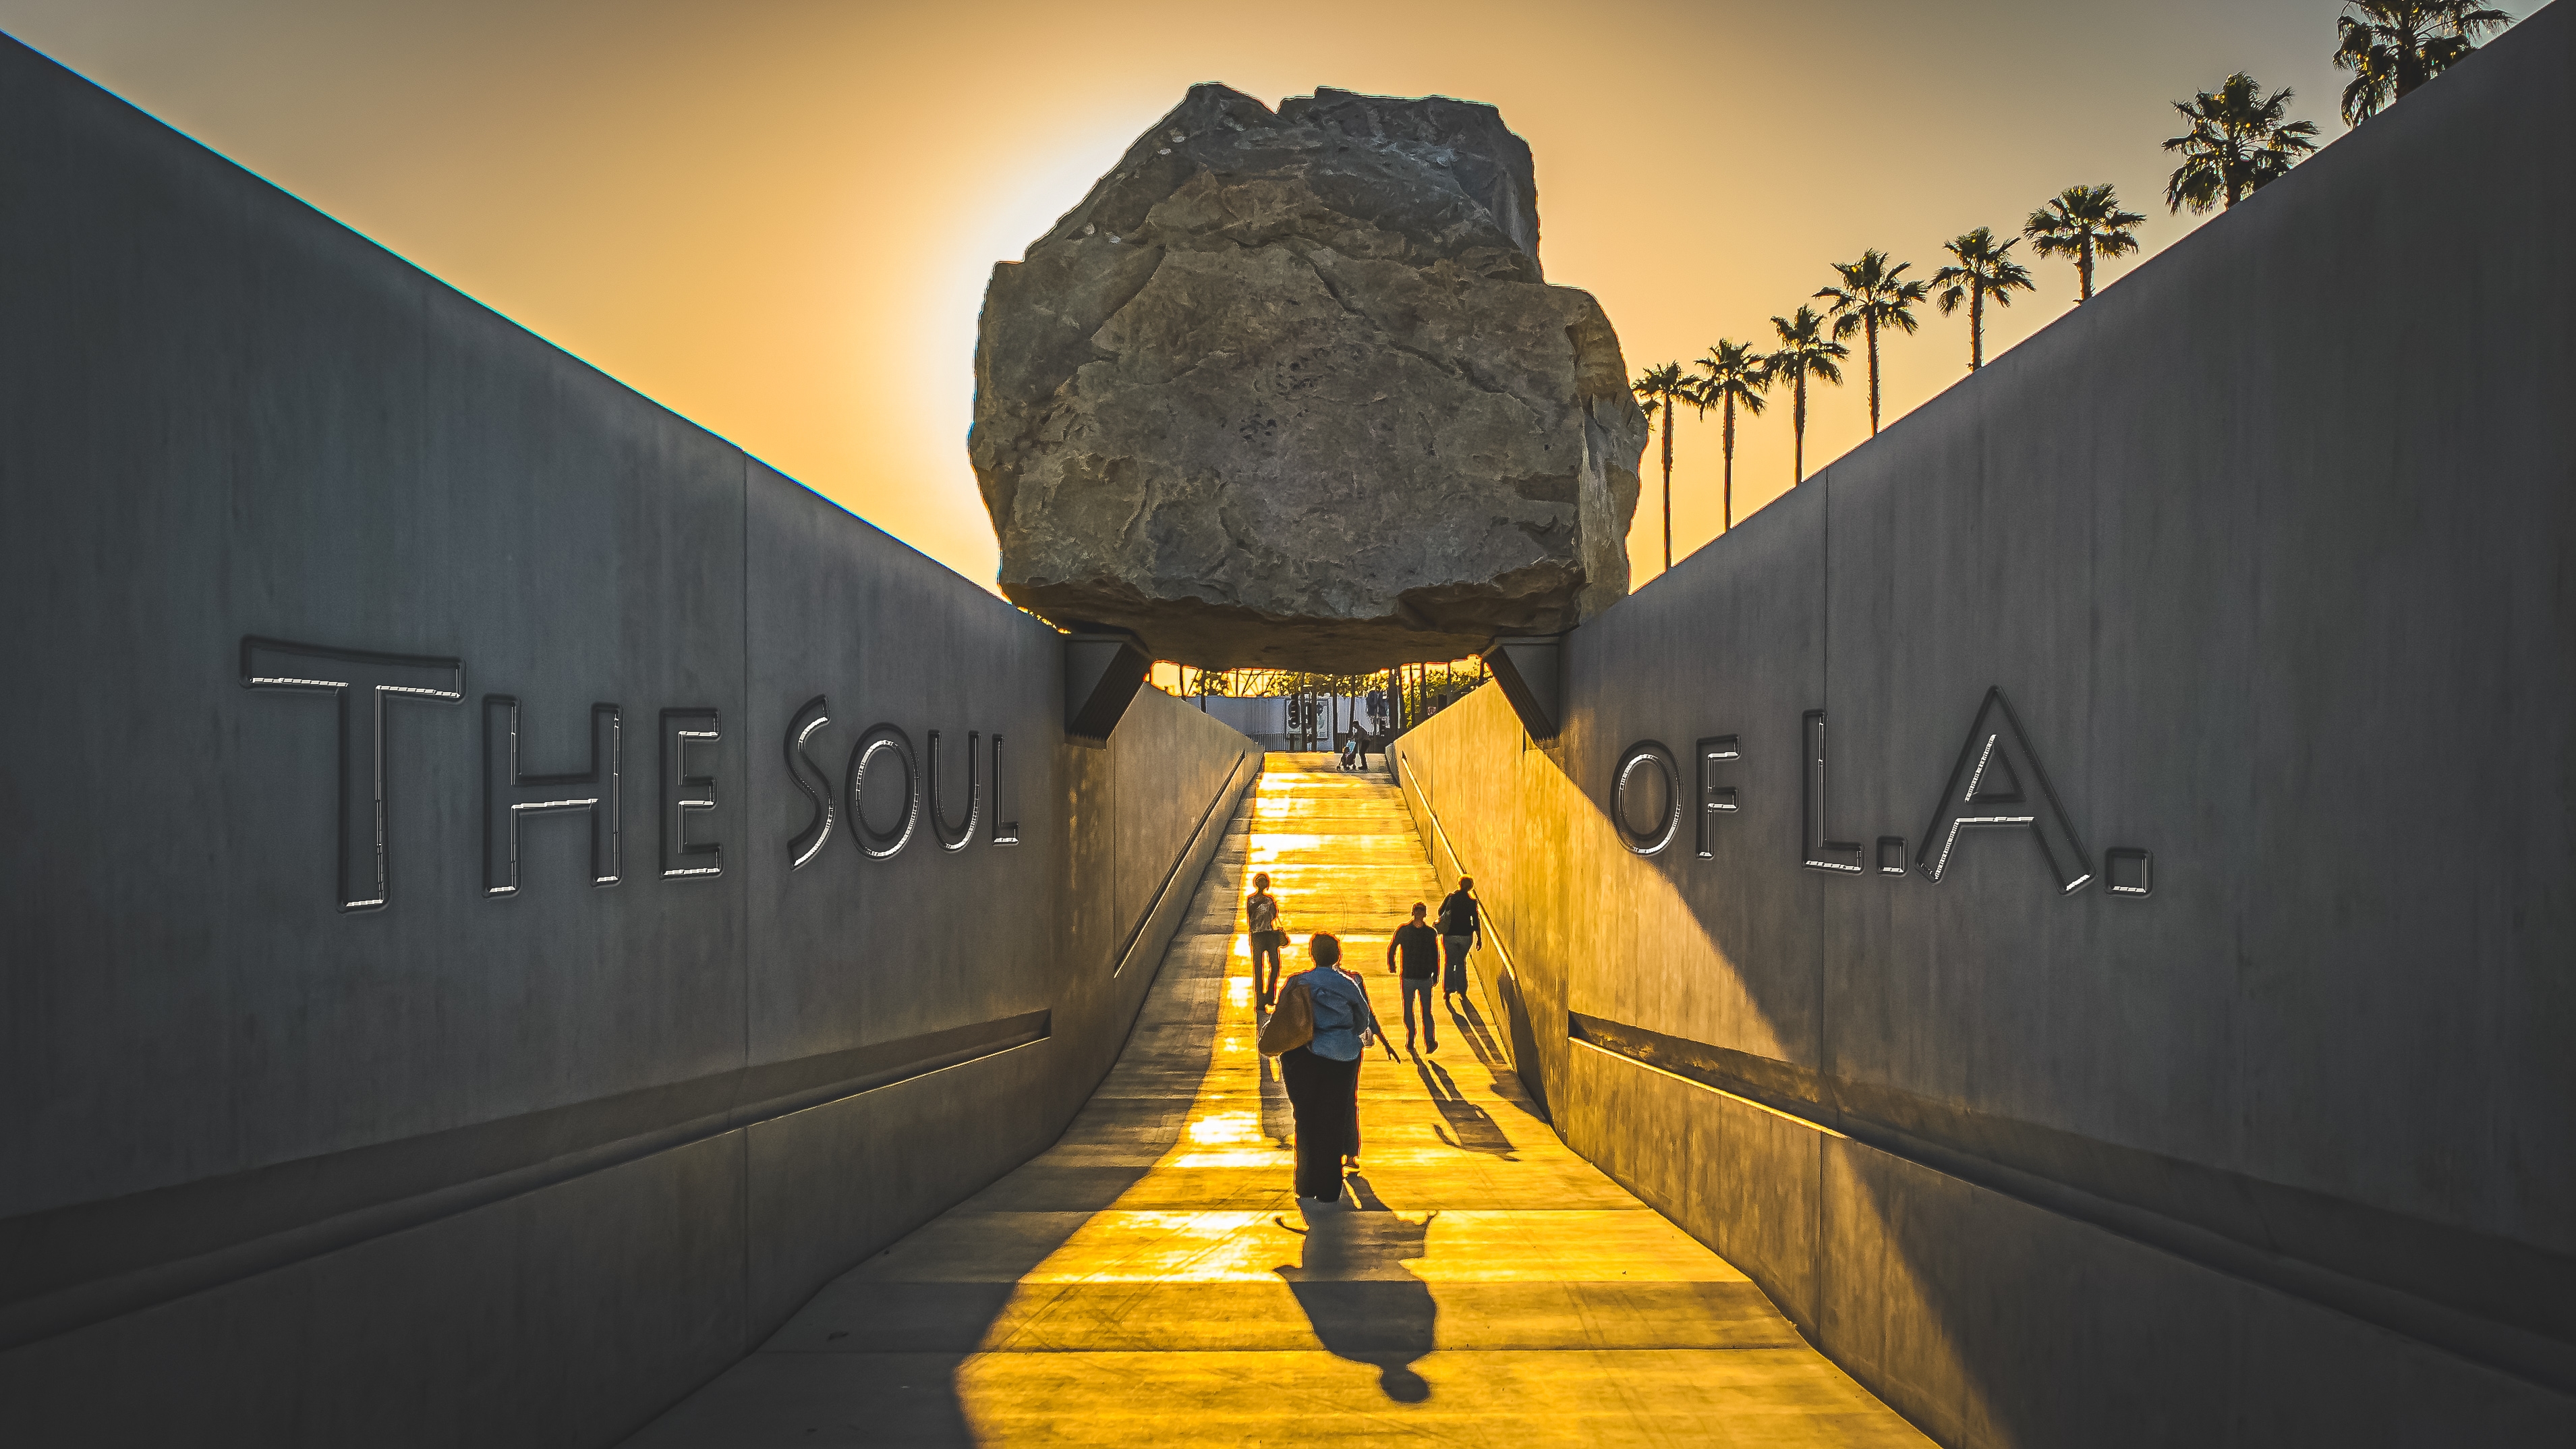 The Soul of LA banner